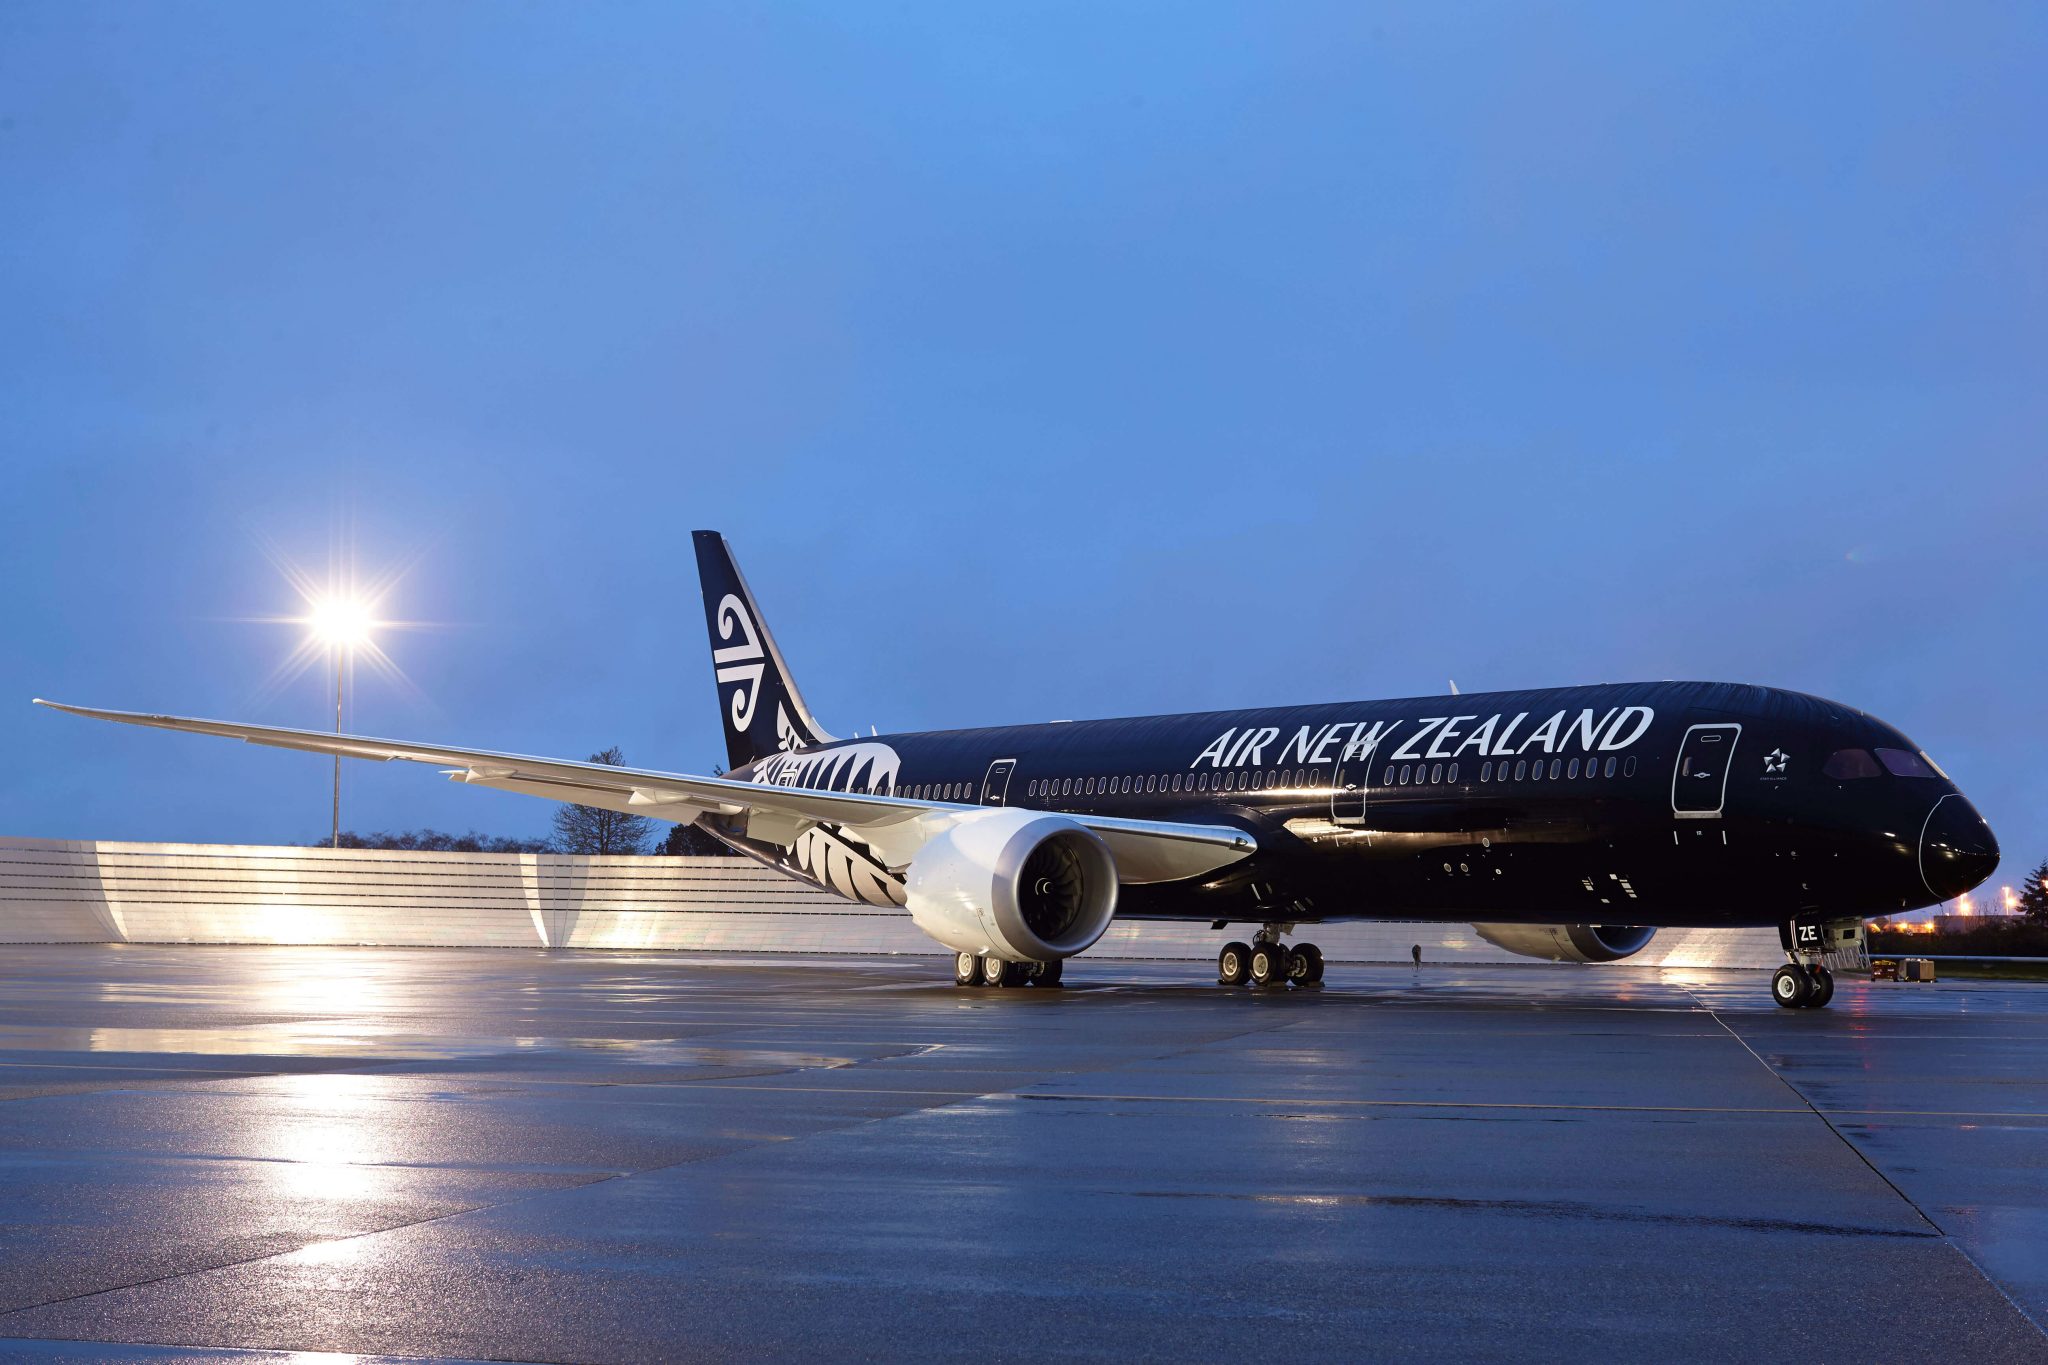 Air New Zealand uses GEnx-1B engine to power its Boeing Dreamliner fleet